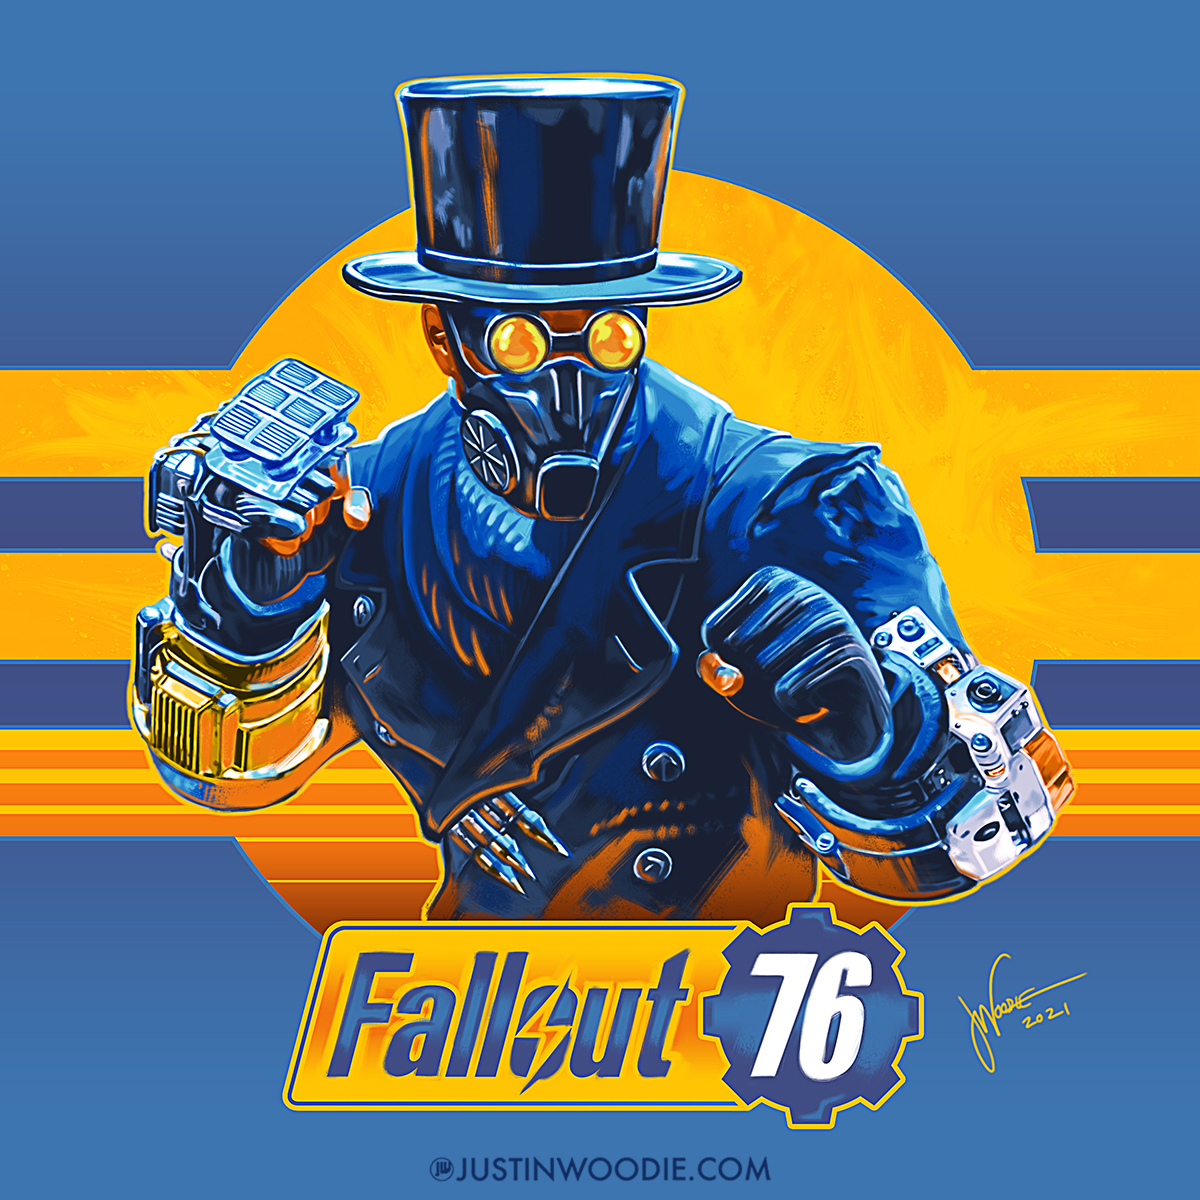 Fallout 76 Digital Illustration